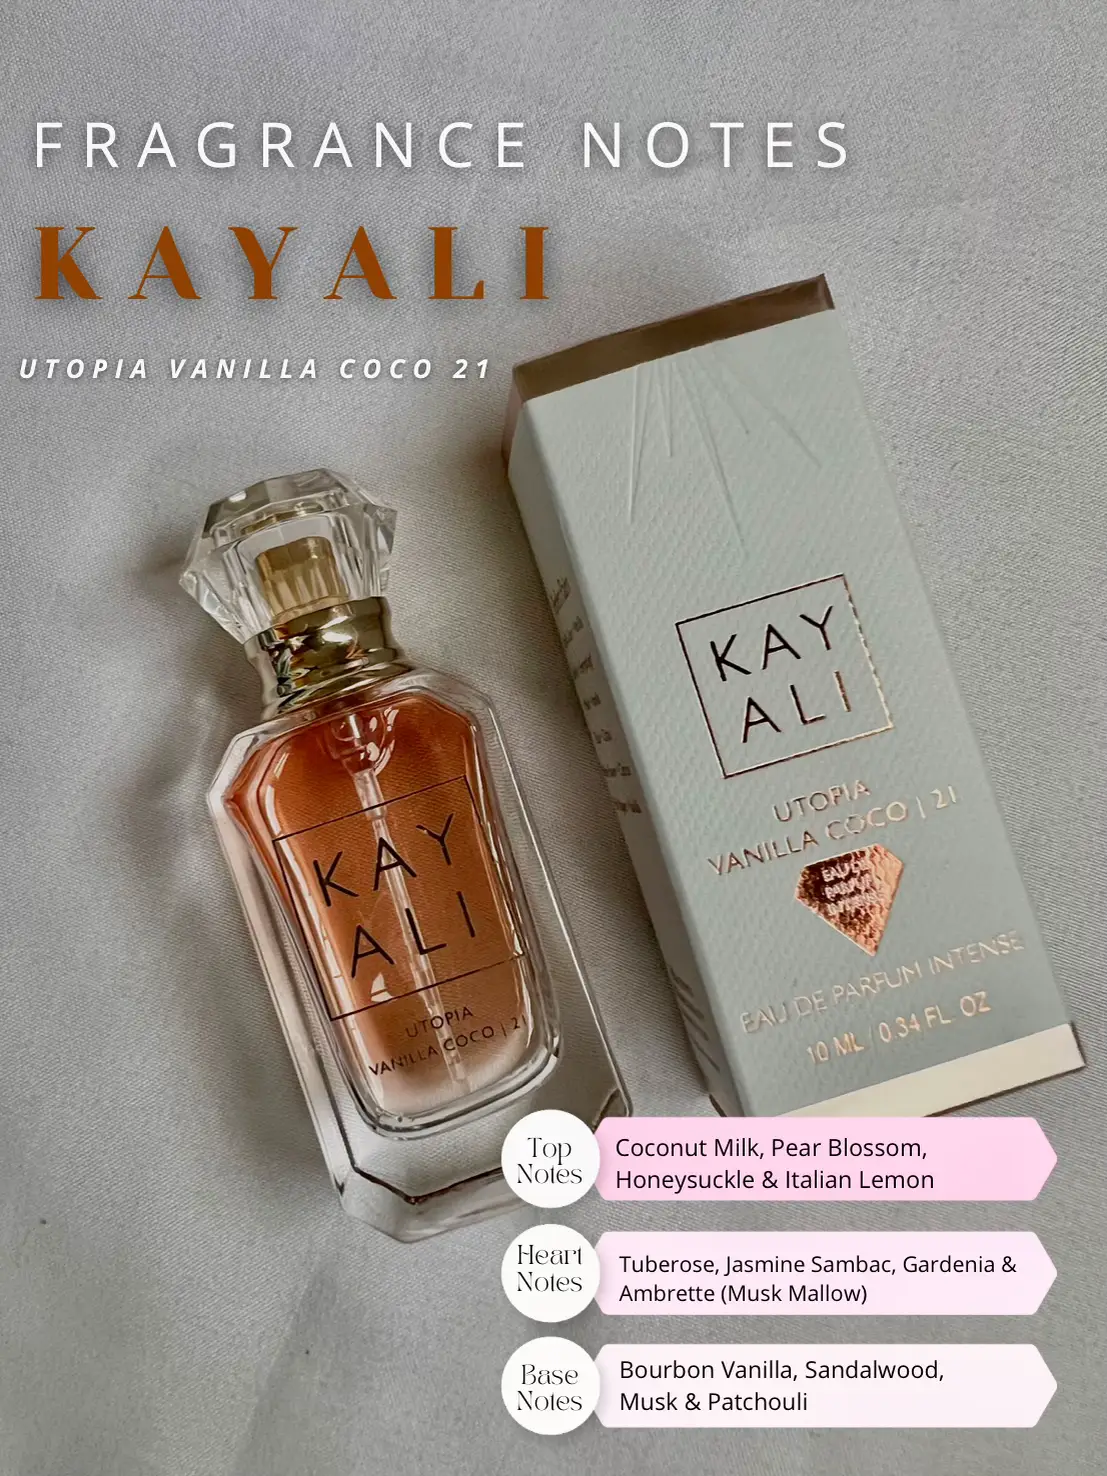 KAYALI UTOPIA VANILLA COCO Perfume Review 